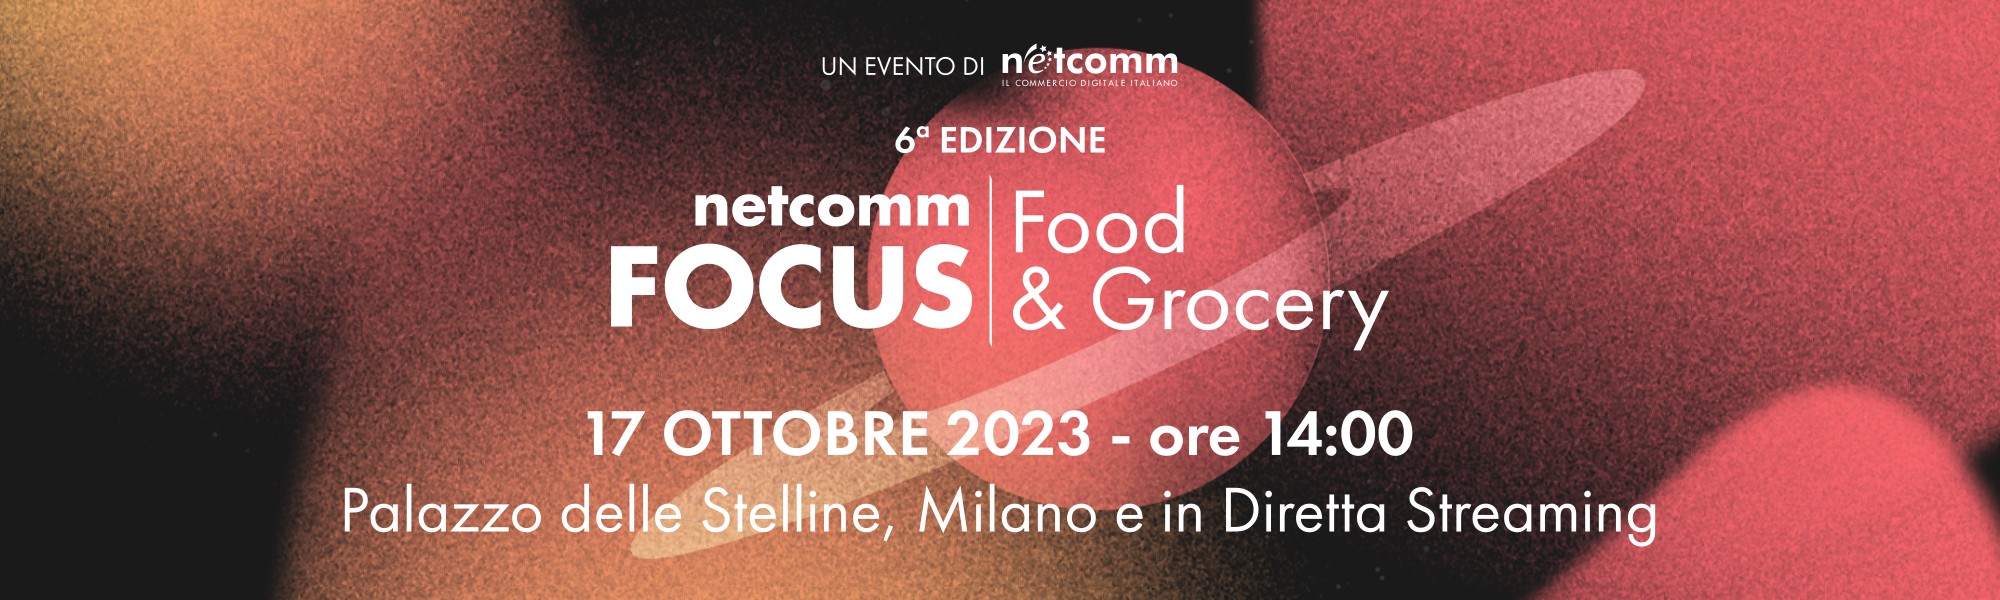 Netcomm FOCUS Food & Grocery 2023